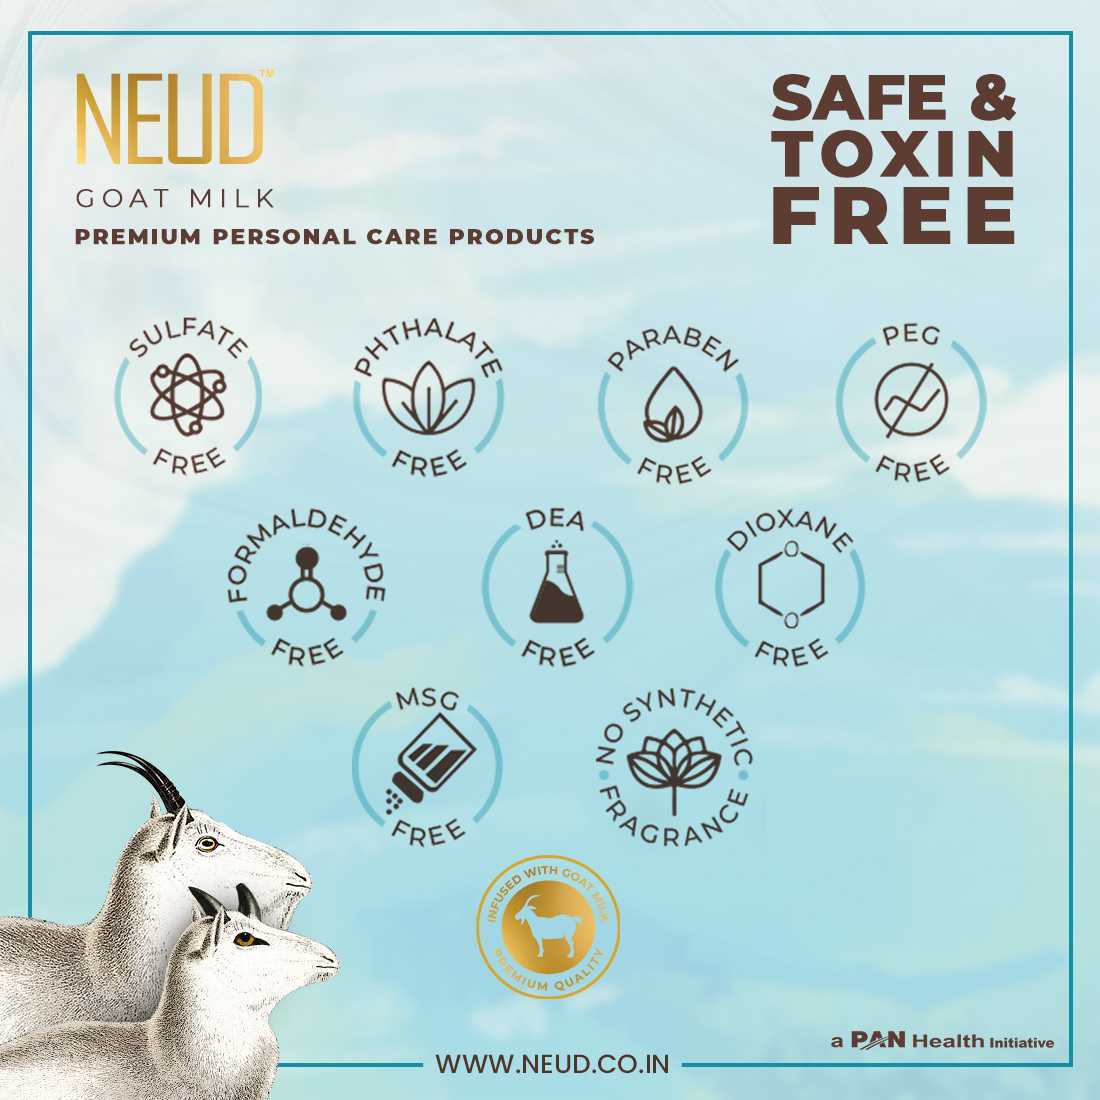 NEUD Trial Pack - Premium Goat Milk Shampoo for Men & Women (25 ml)